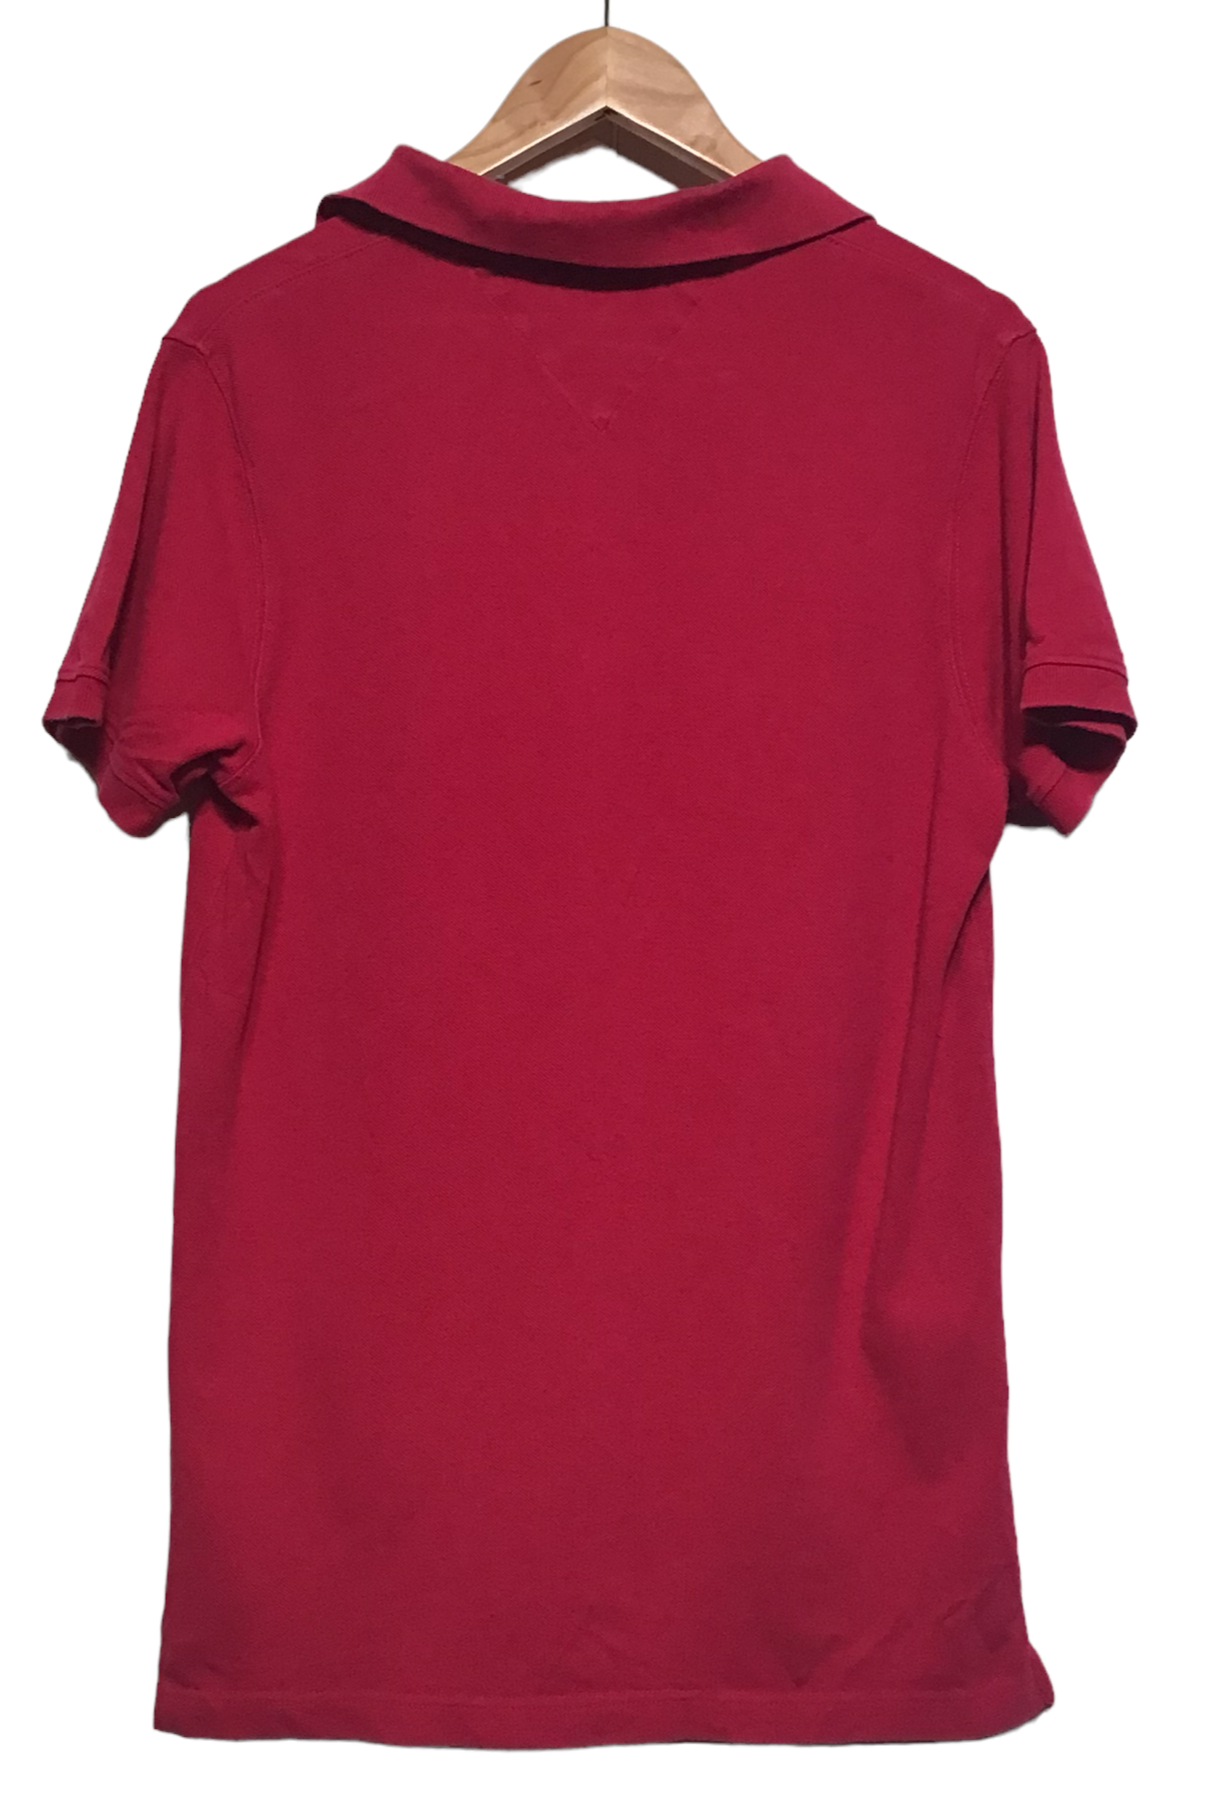 Tommy Hilfiger Polo Shirt (Size M)